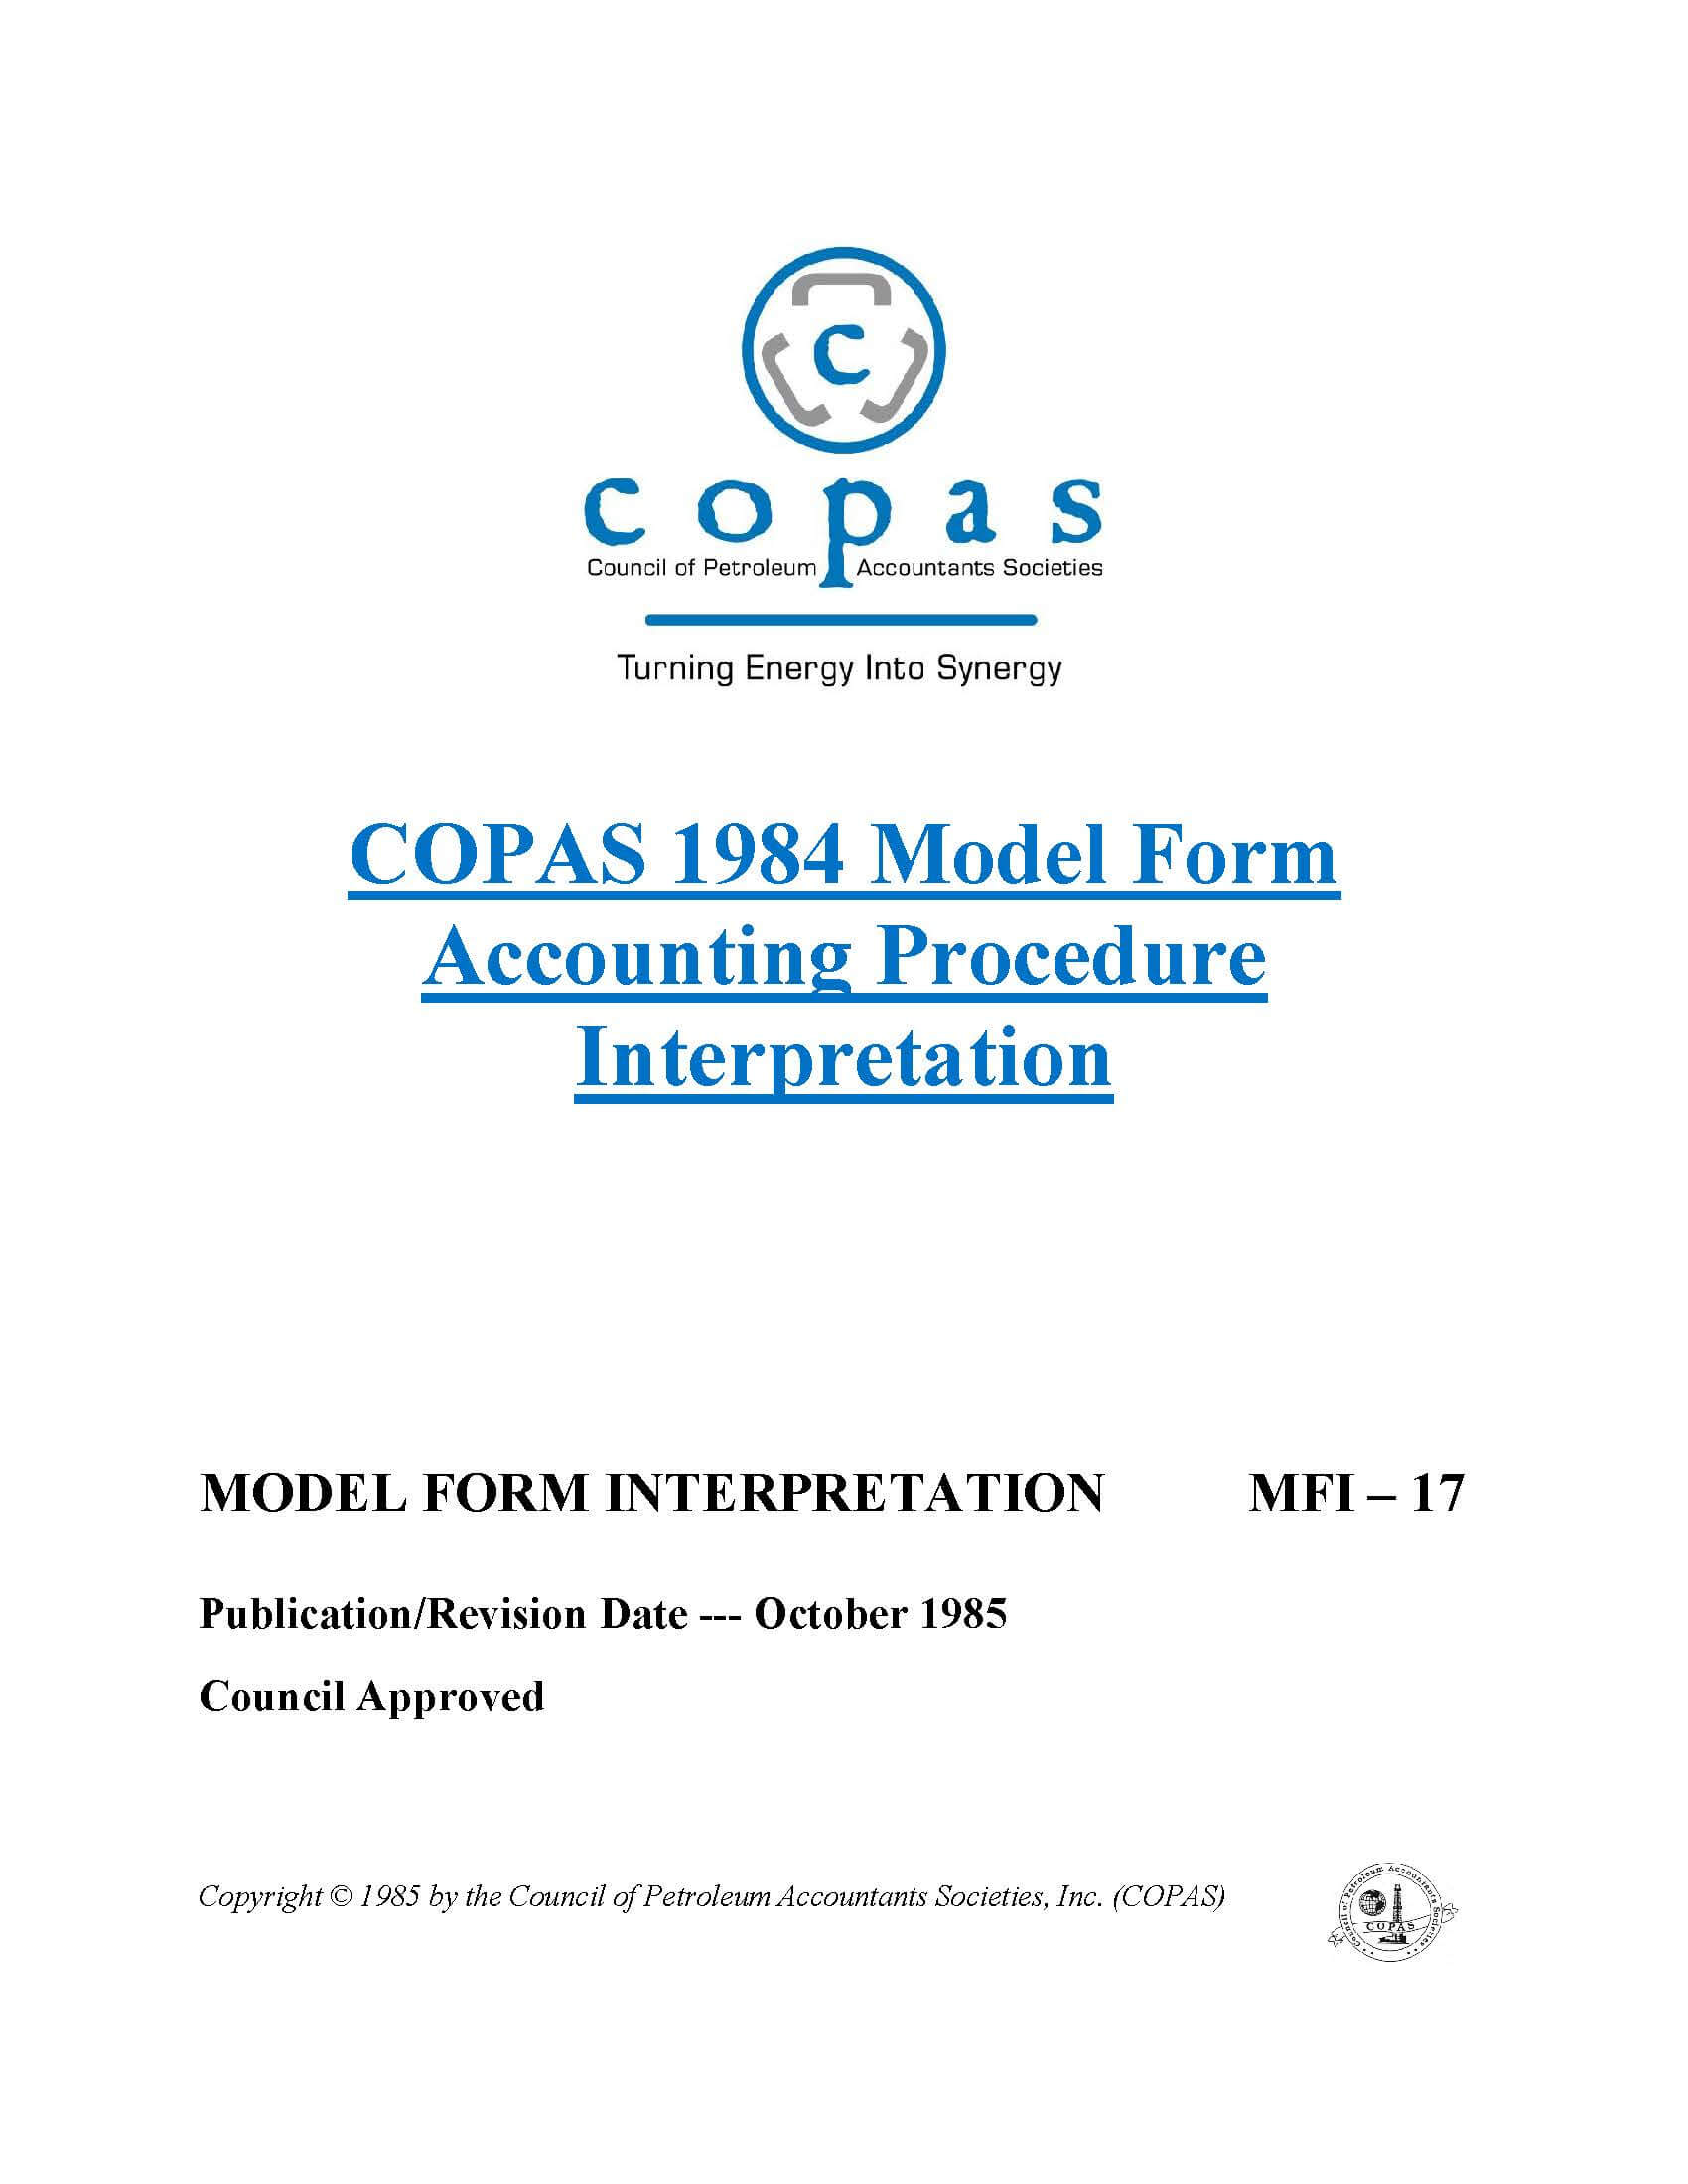 MFI-17 1984 Model Form Accounting Procedure Interpretation - products MFI 17 1984 Model Form Accounting Procedure Interpretation - Council of Petroleum Accountants Societies